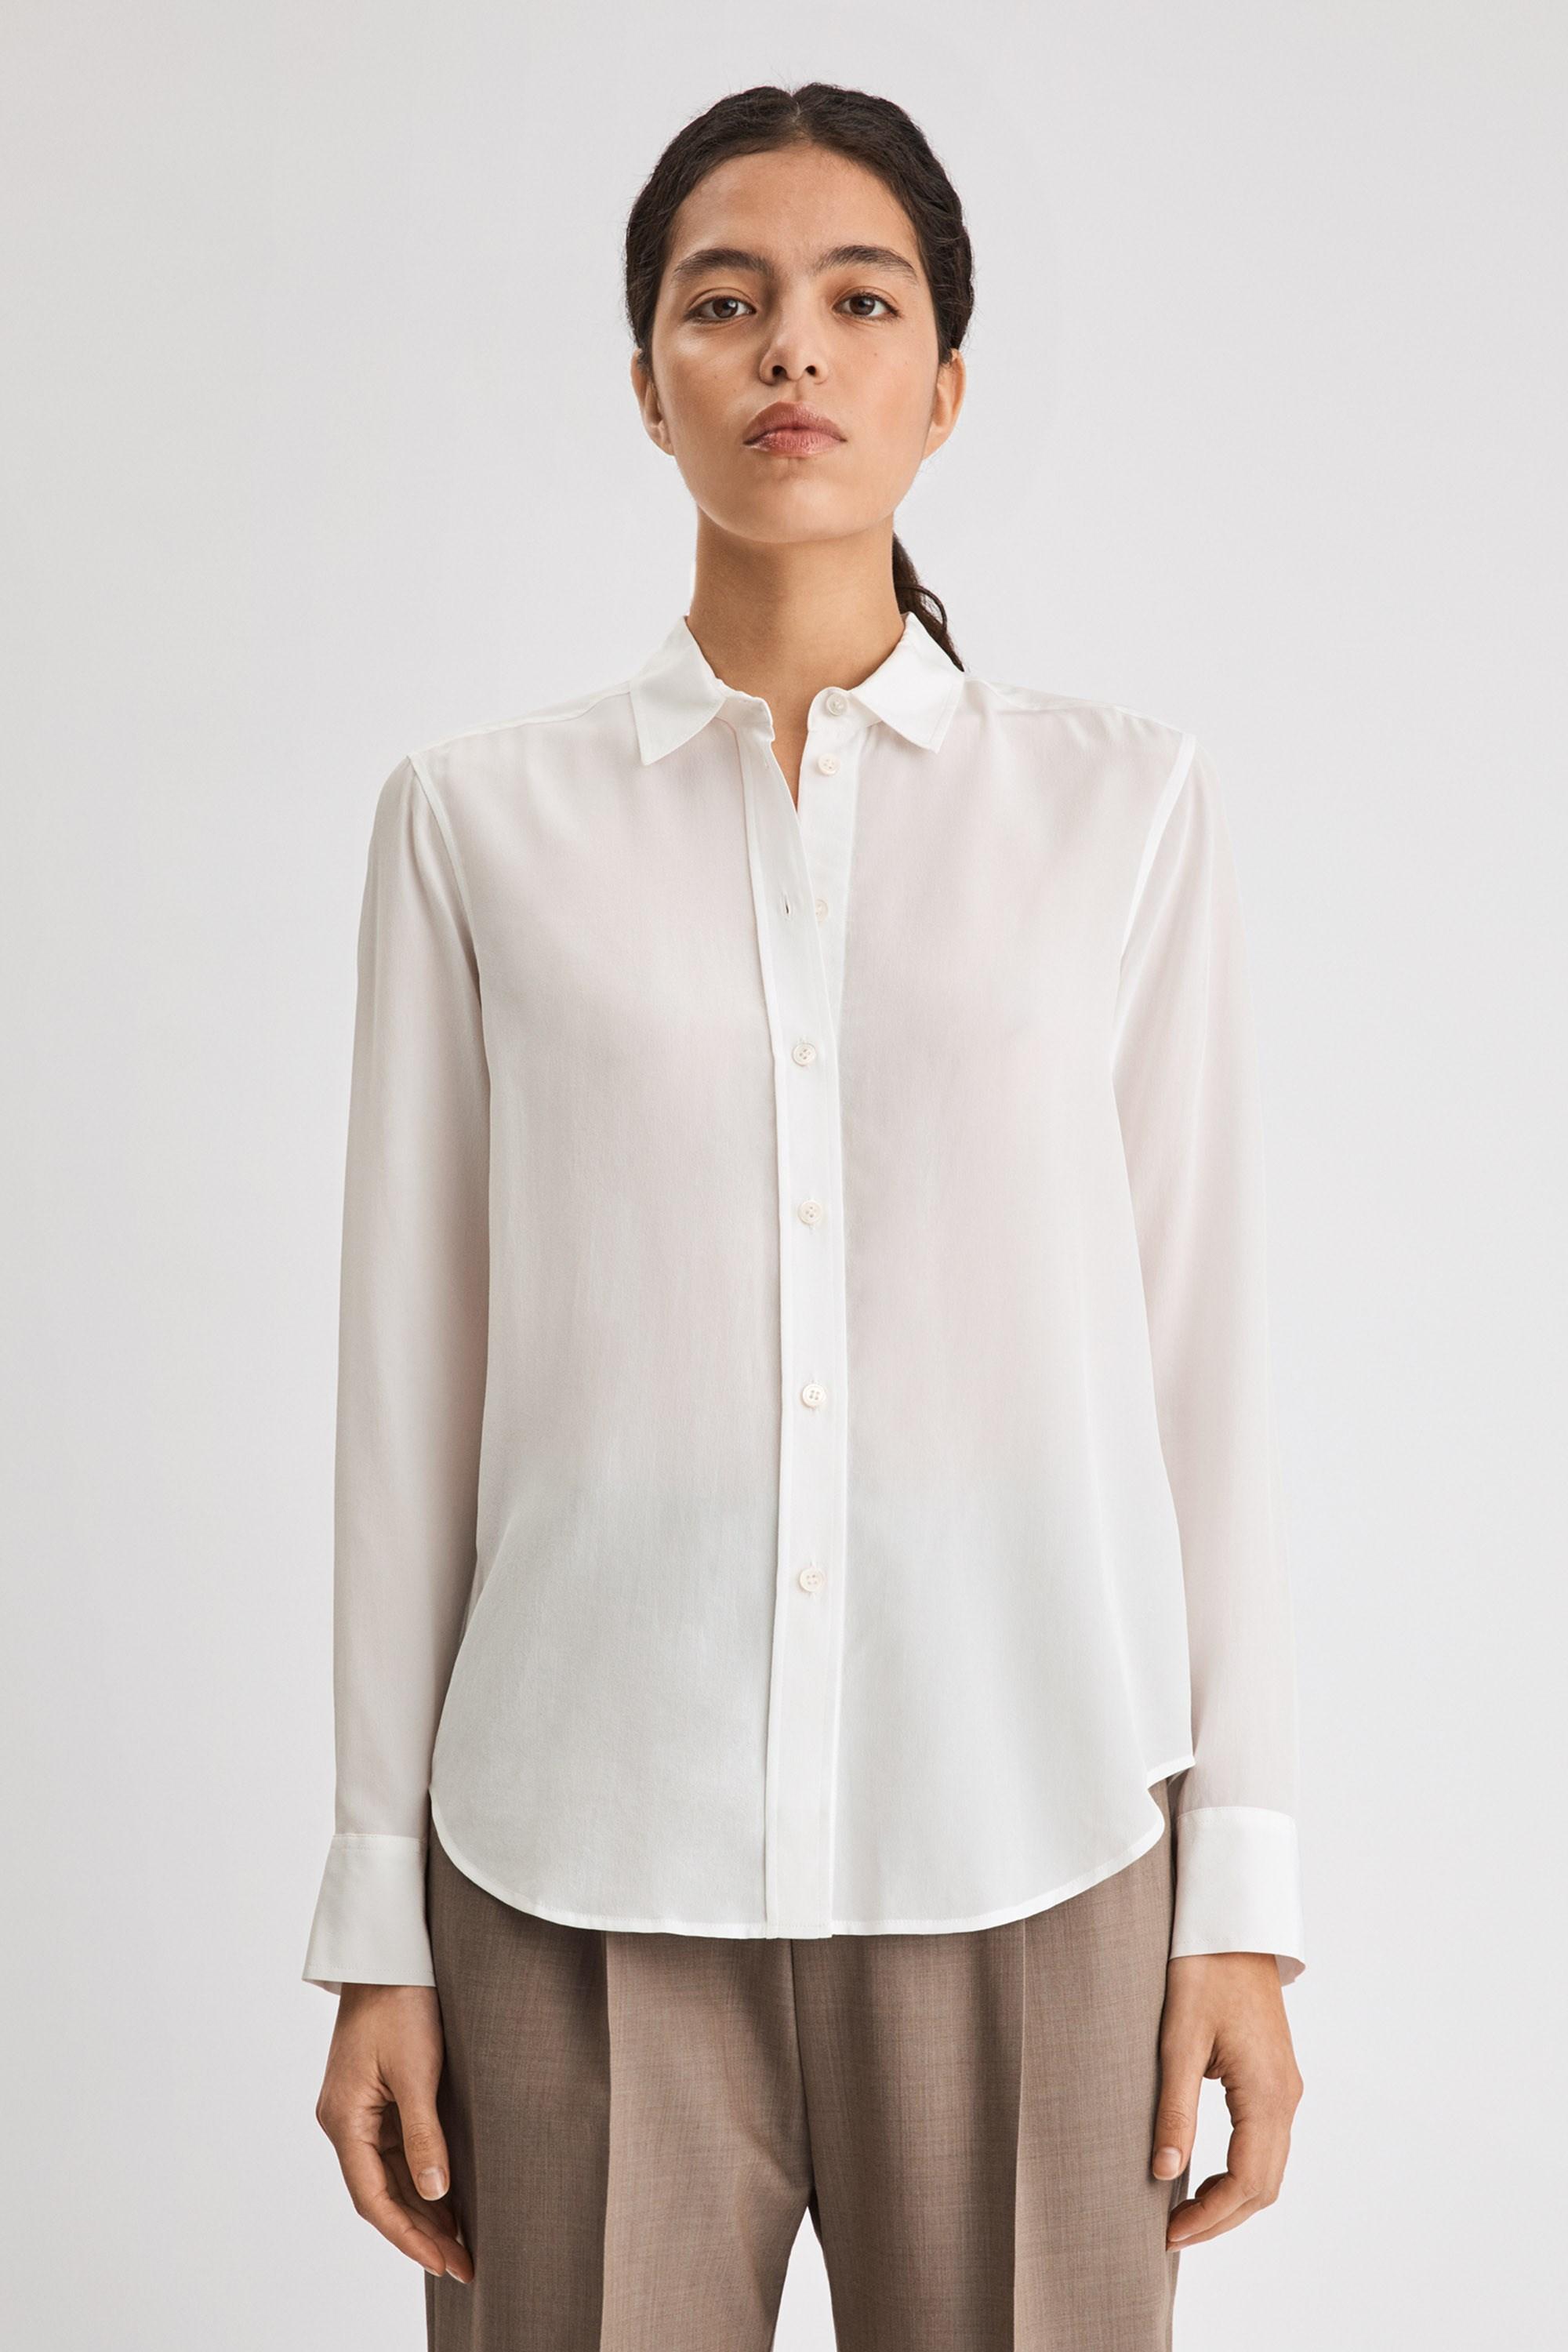 Filippa K Classic Silk Shirt in White - Save 16% - Lyst